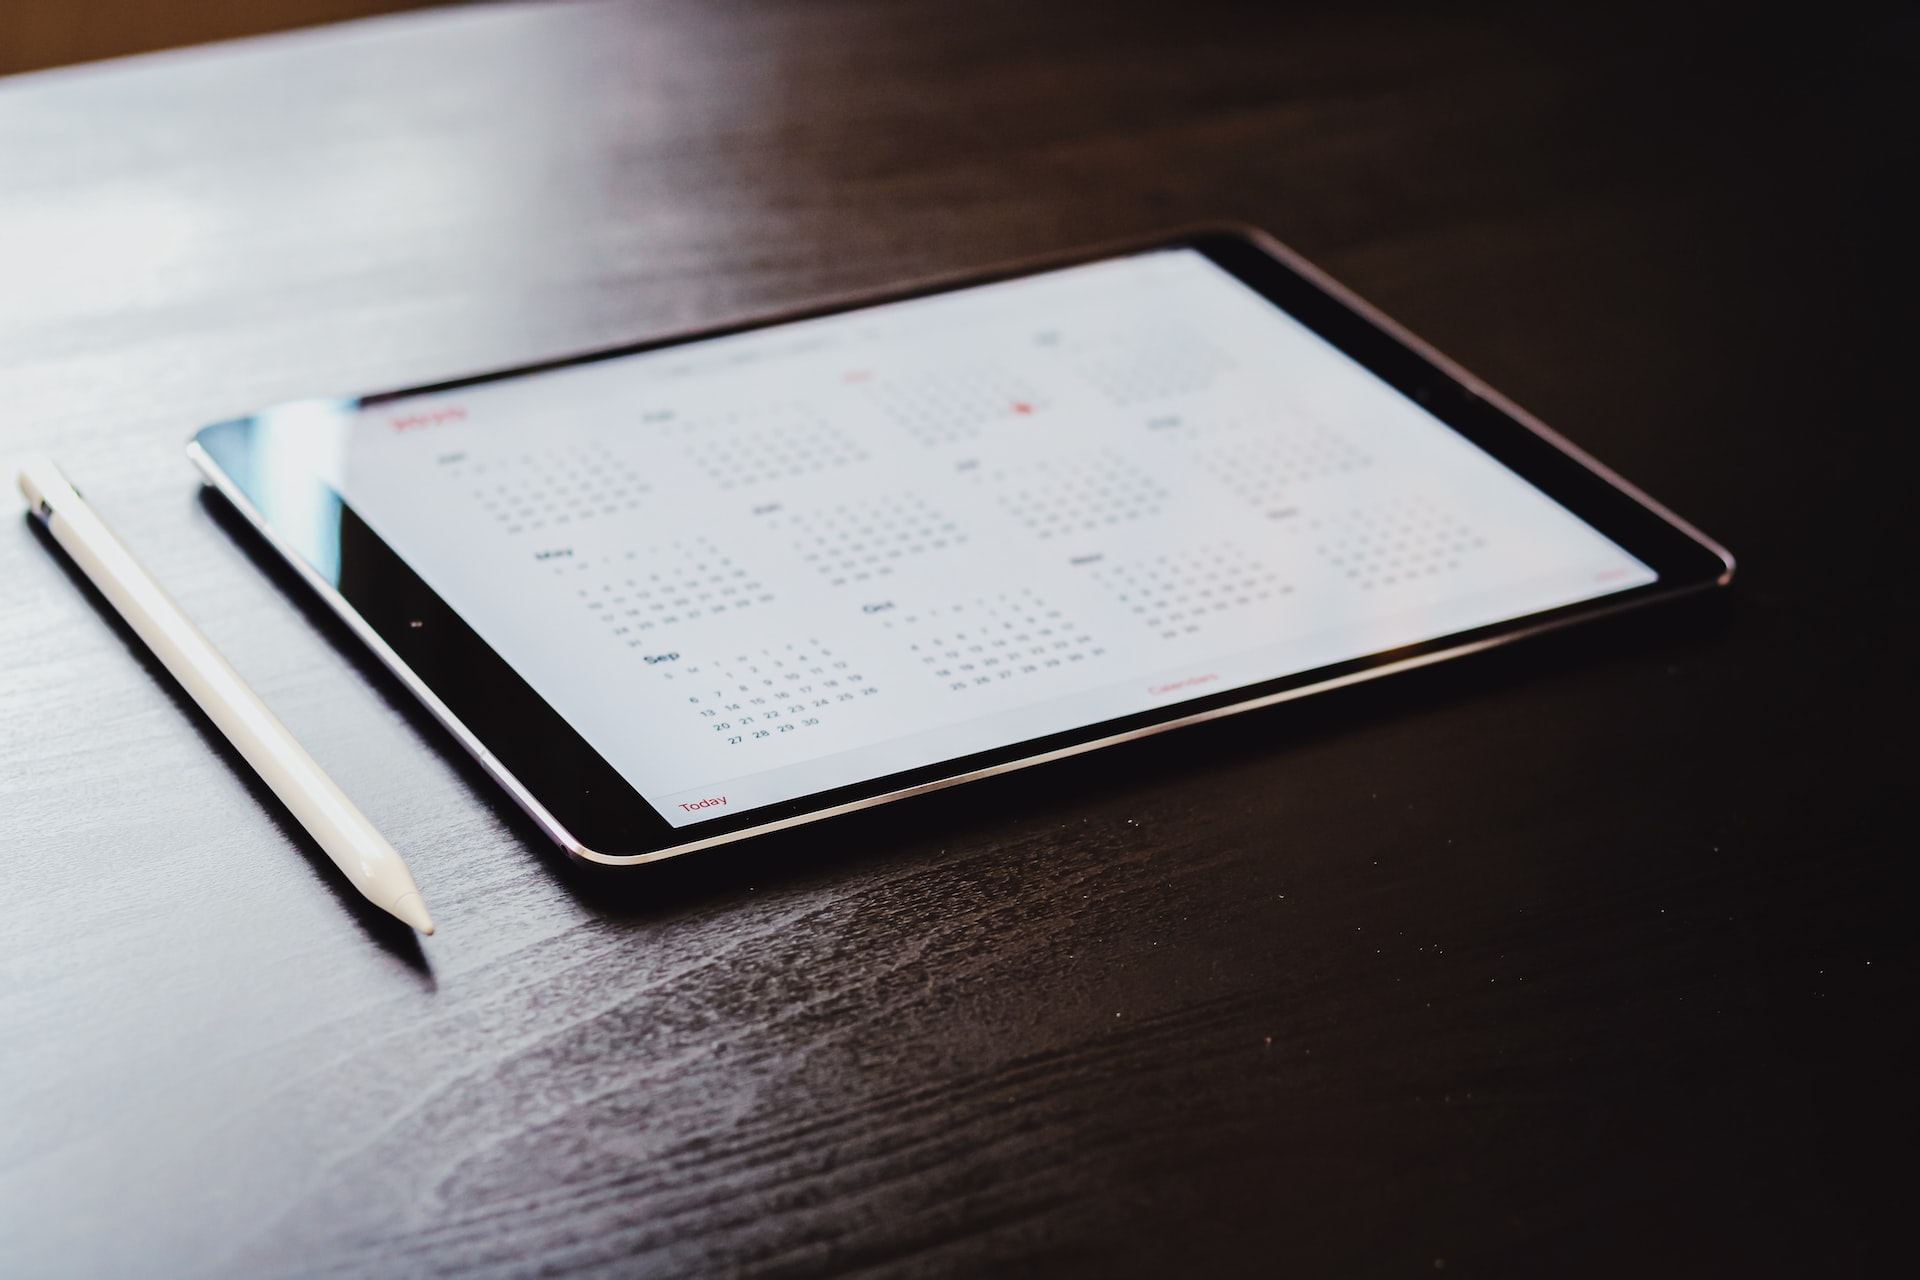 Calendar app displayed on an iPad